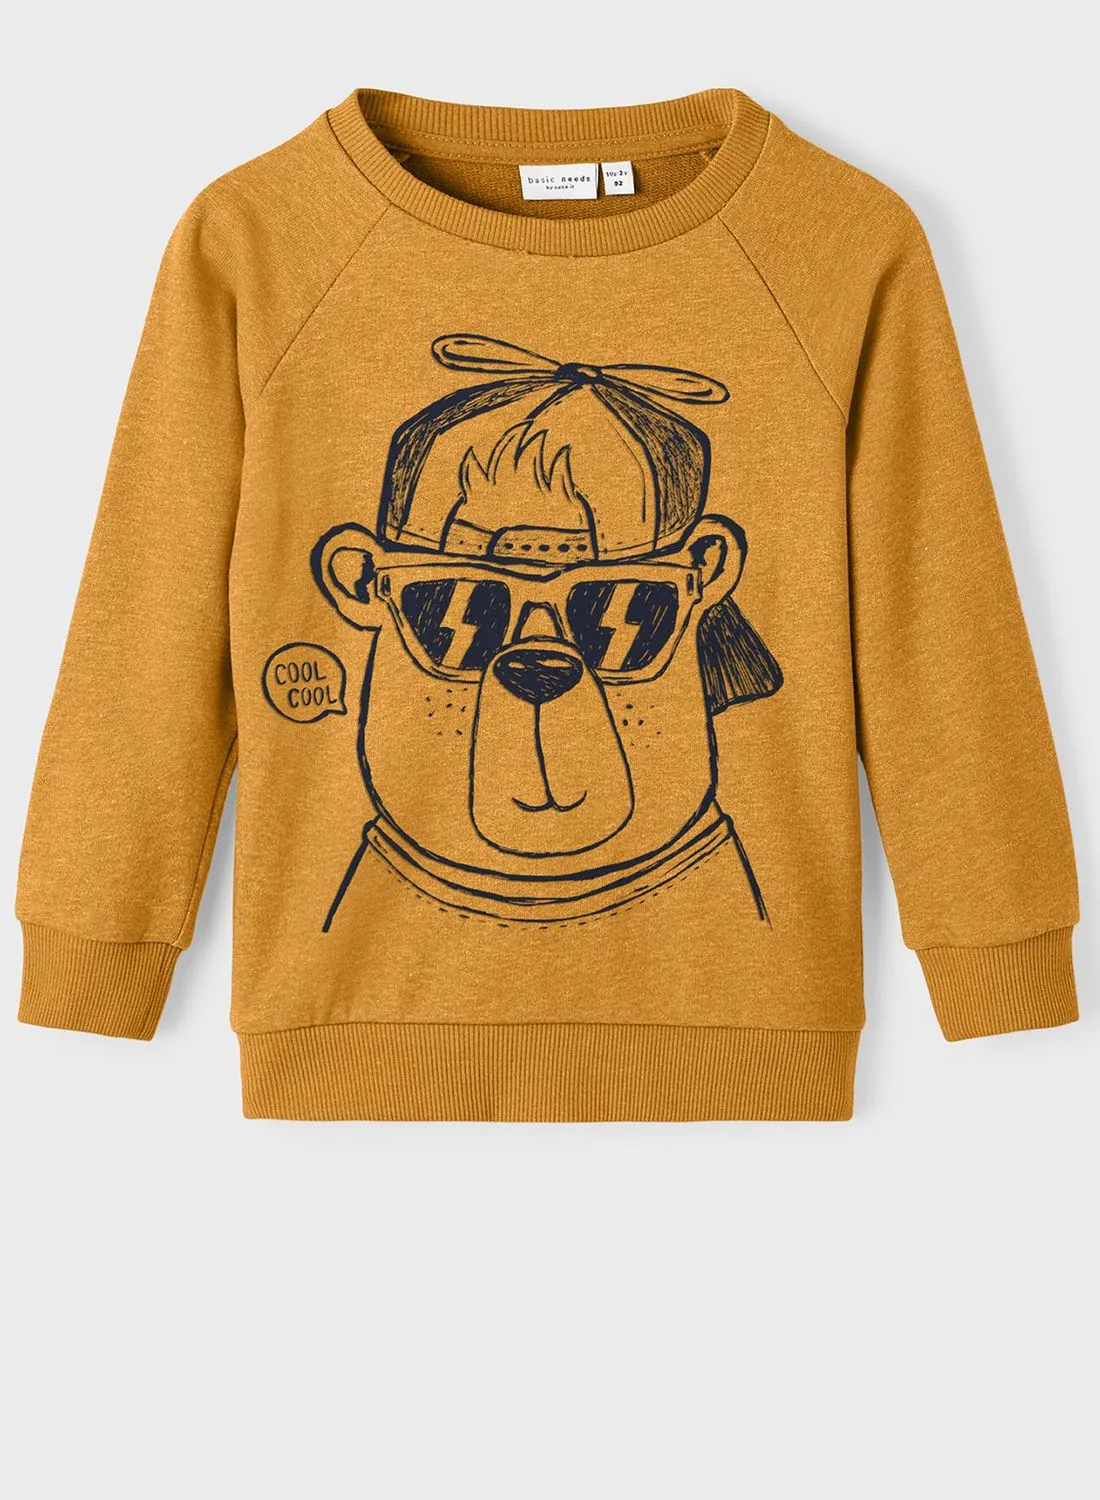 NAME IT Kids Graphic Sweatshirt